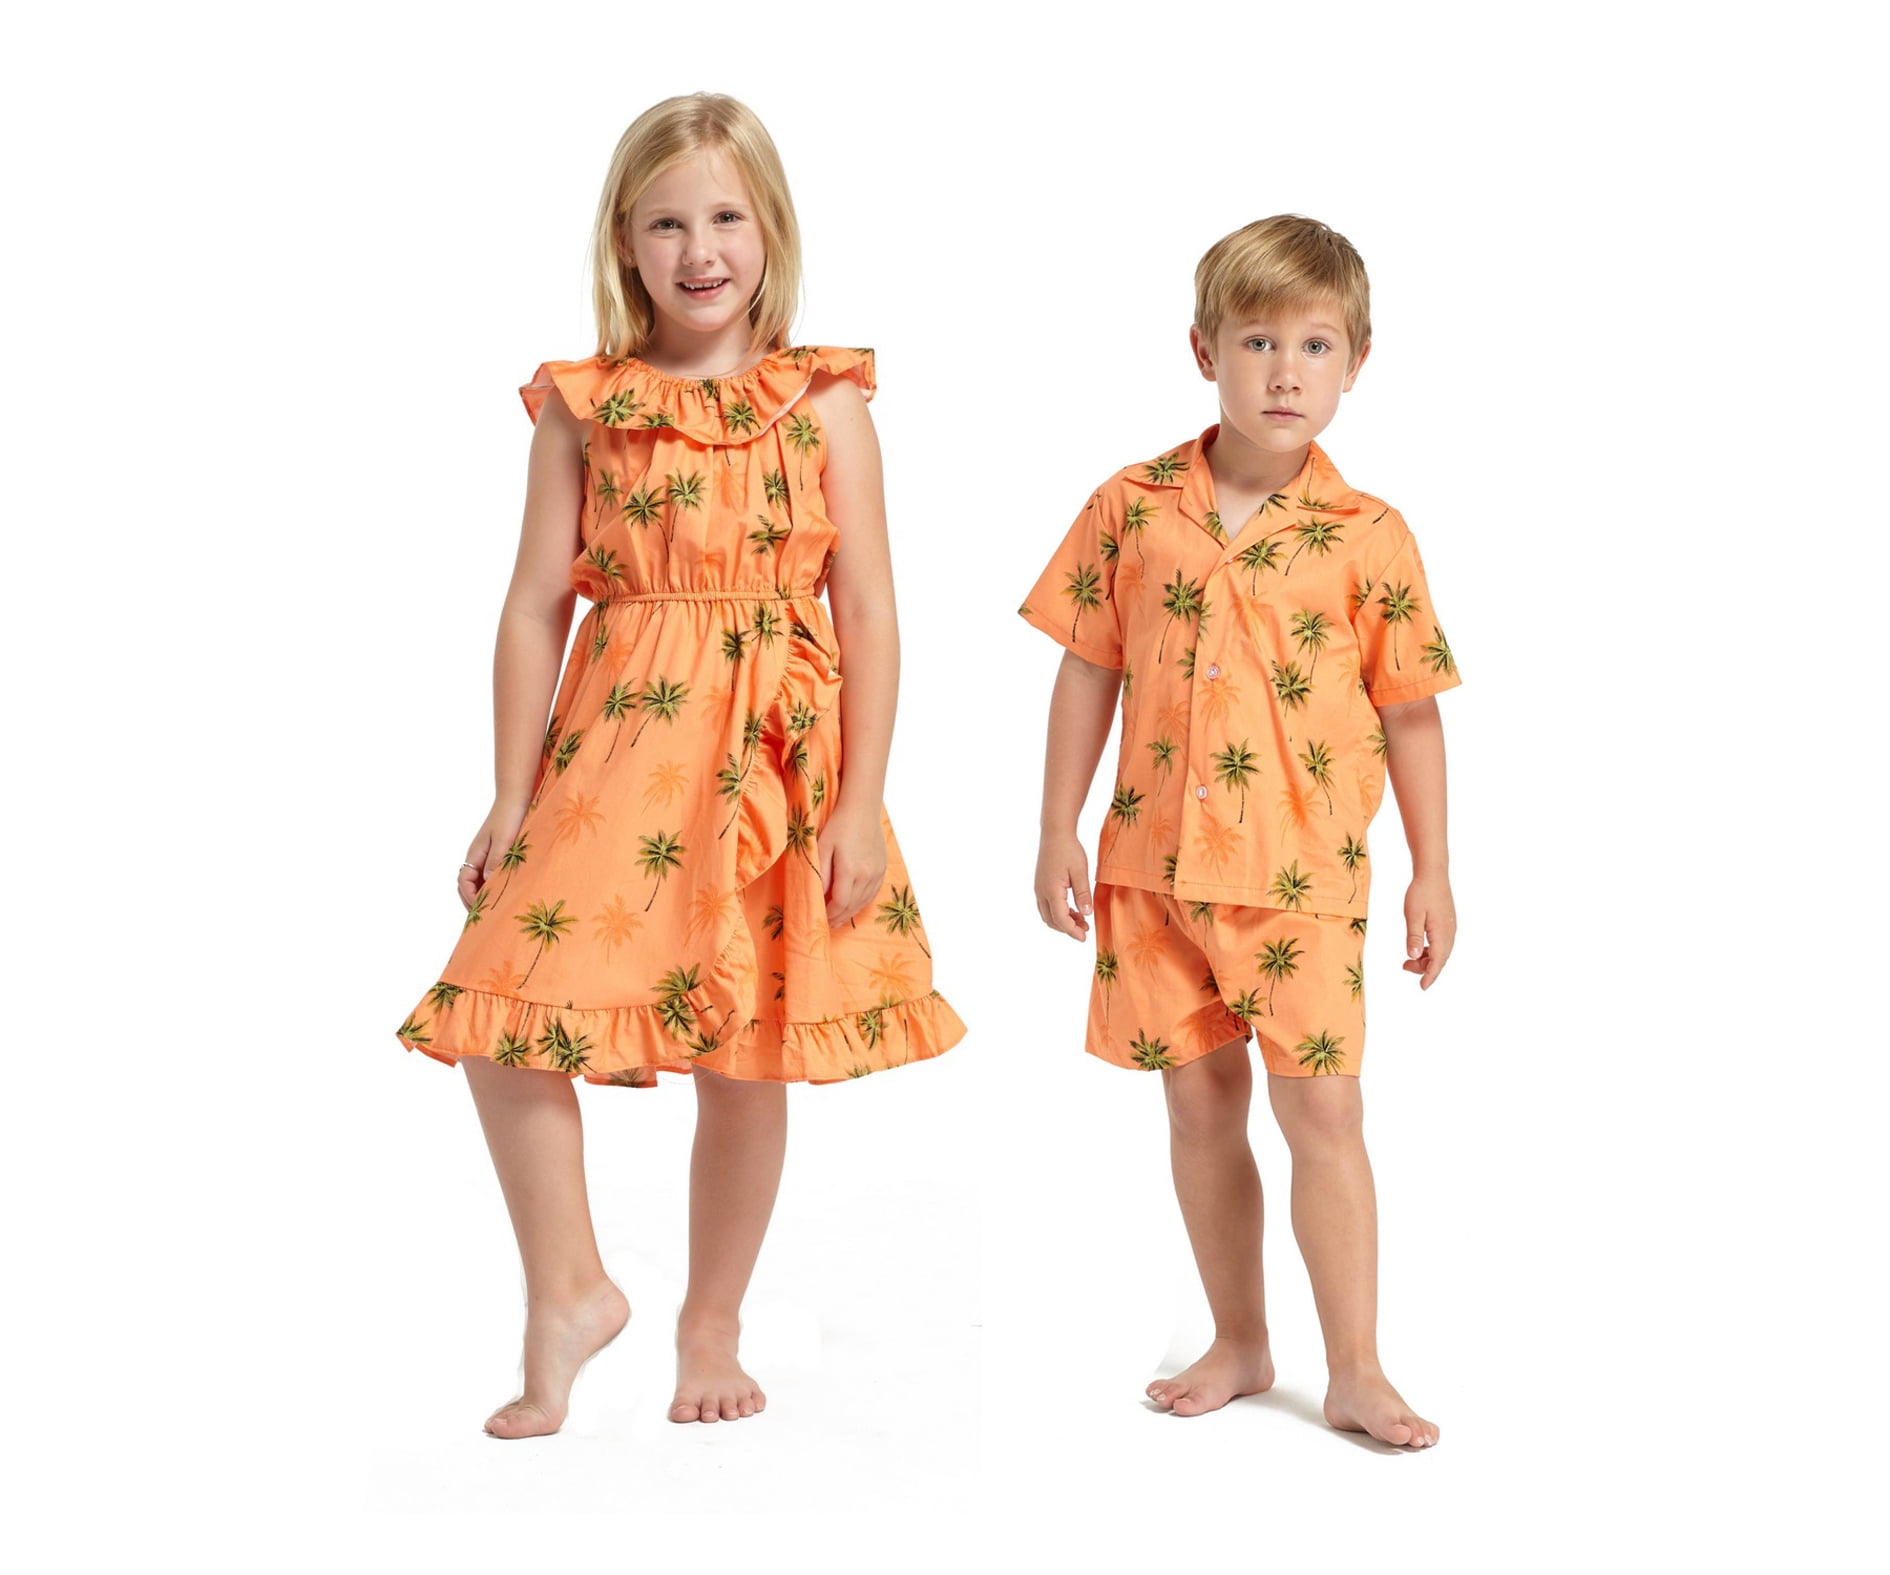 Matching and Girl Hawaiian Luau Outfits in Orange Palm Trees - Walmart.com